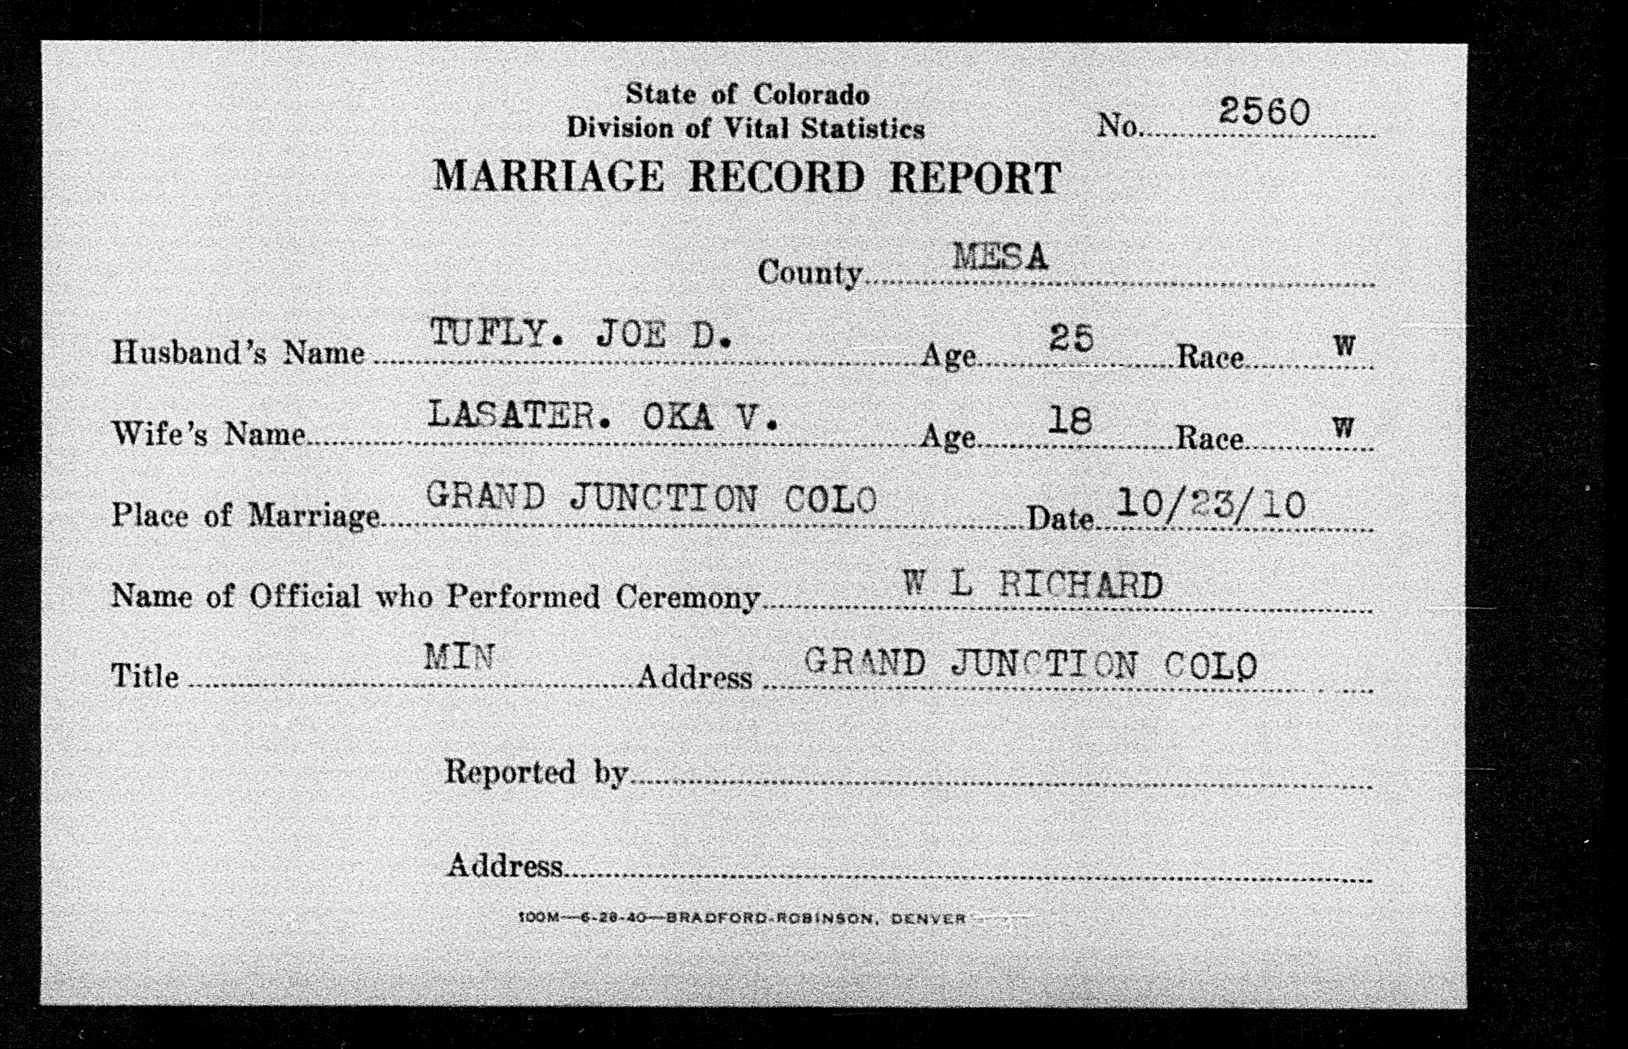 Oka V. Lasater, marriage to Joseph Daniel Tufly, 1910, Mesa County, Colorado